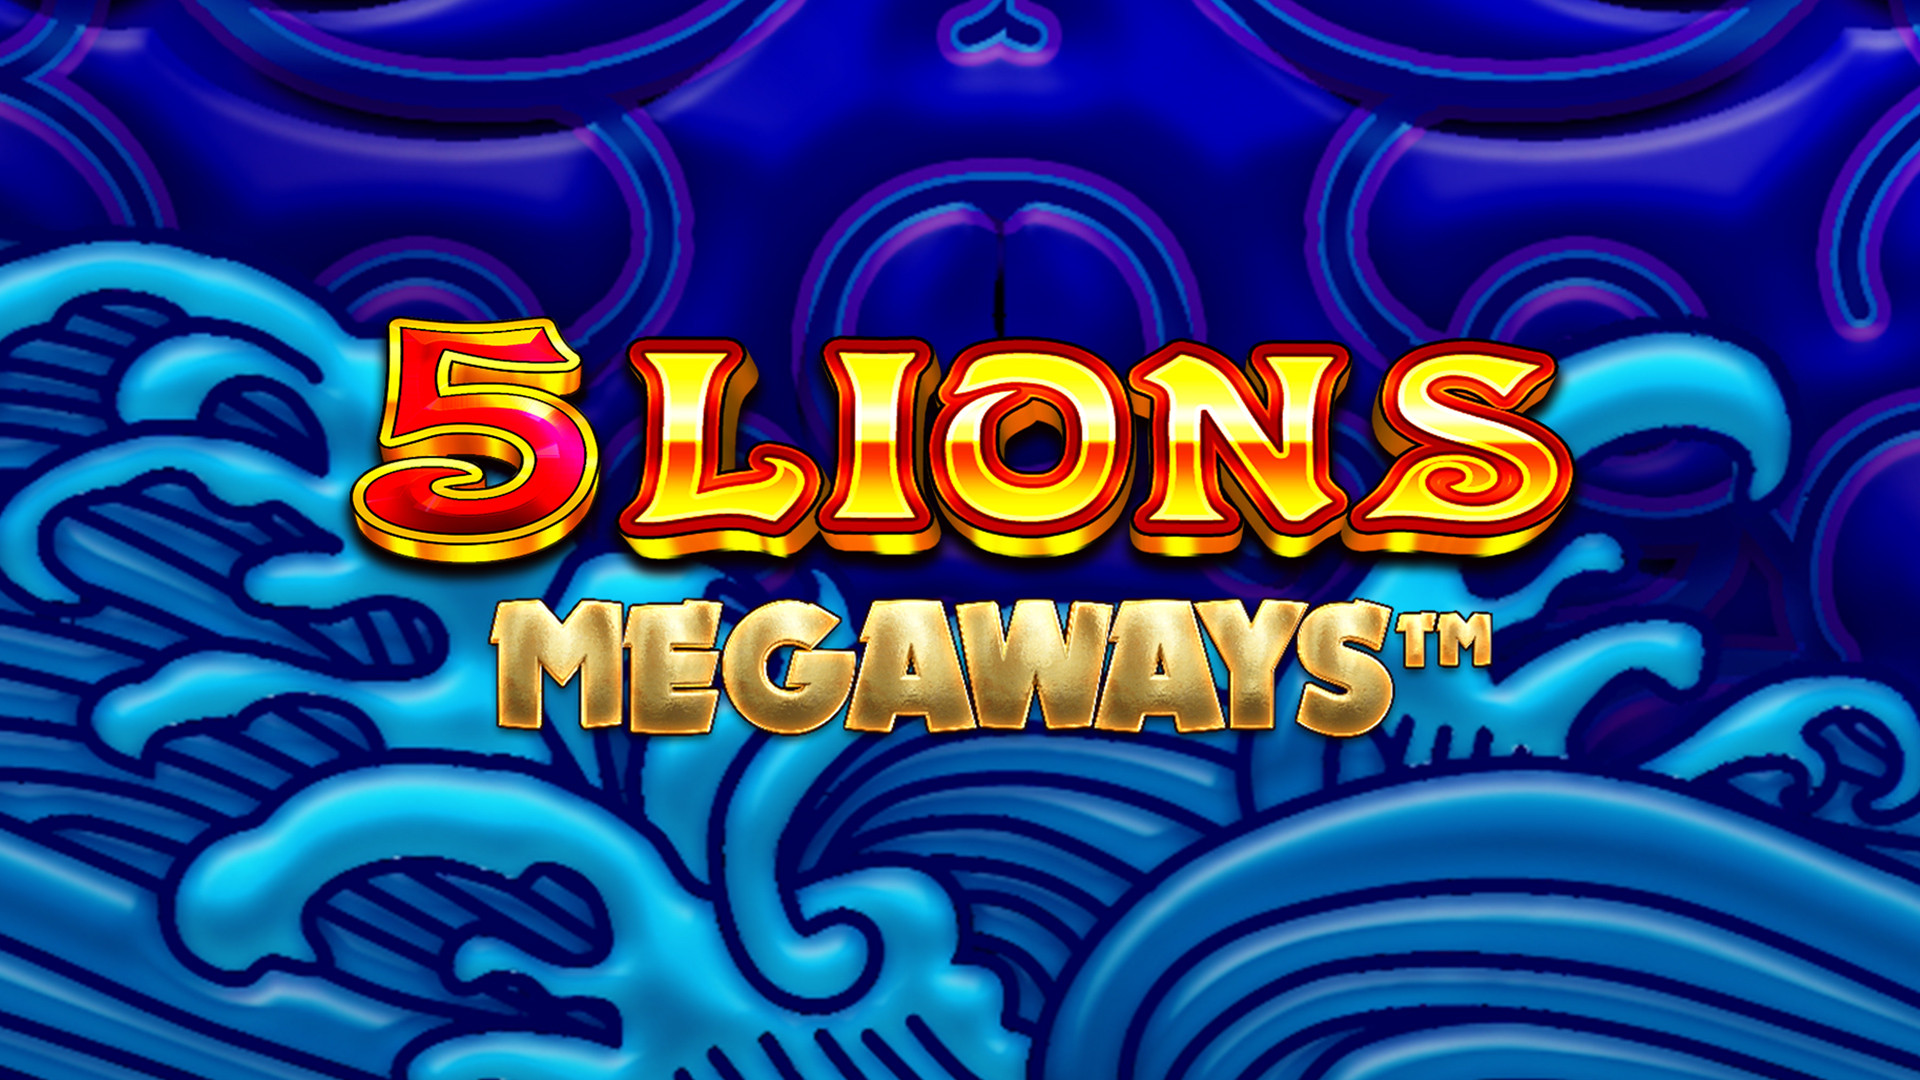 5 Lions MEGAWAYS